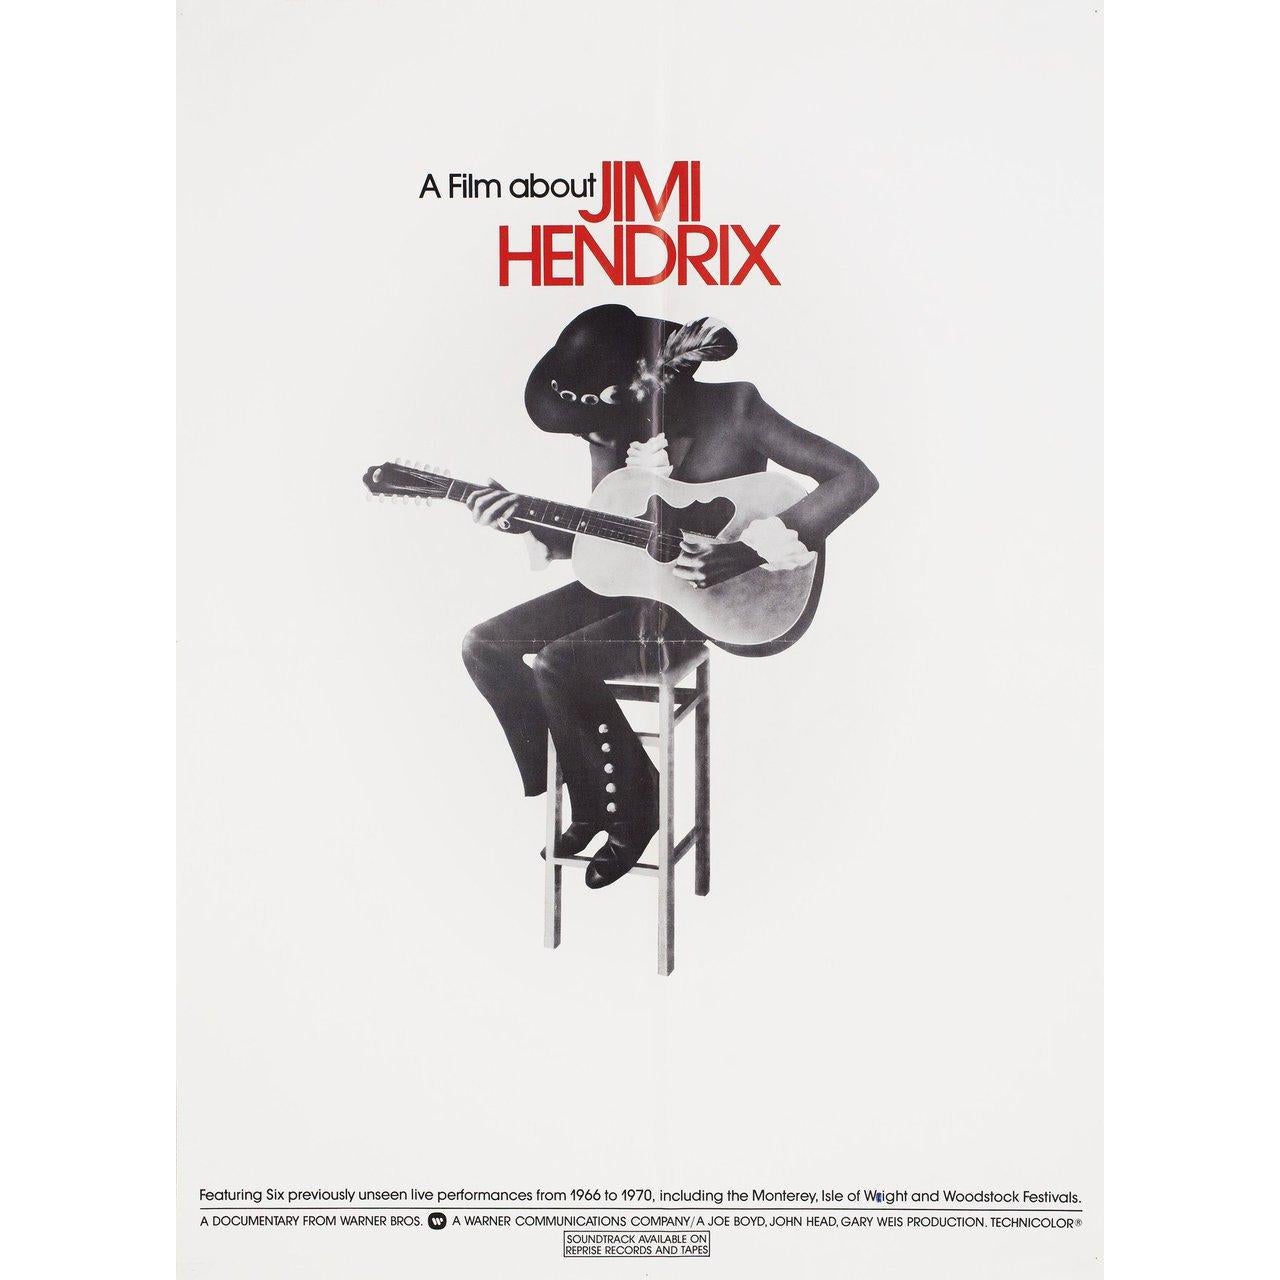 Original 1973 U.S. poster for the documentary film A Film about Jimi Hendrix directed by Joe Boyd / John Head / Gary Weis with Arthur Allen / Albert Allen / Stella Benabon / Eric Barrett. Very Good-Fine condition, folded. Many original posters were